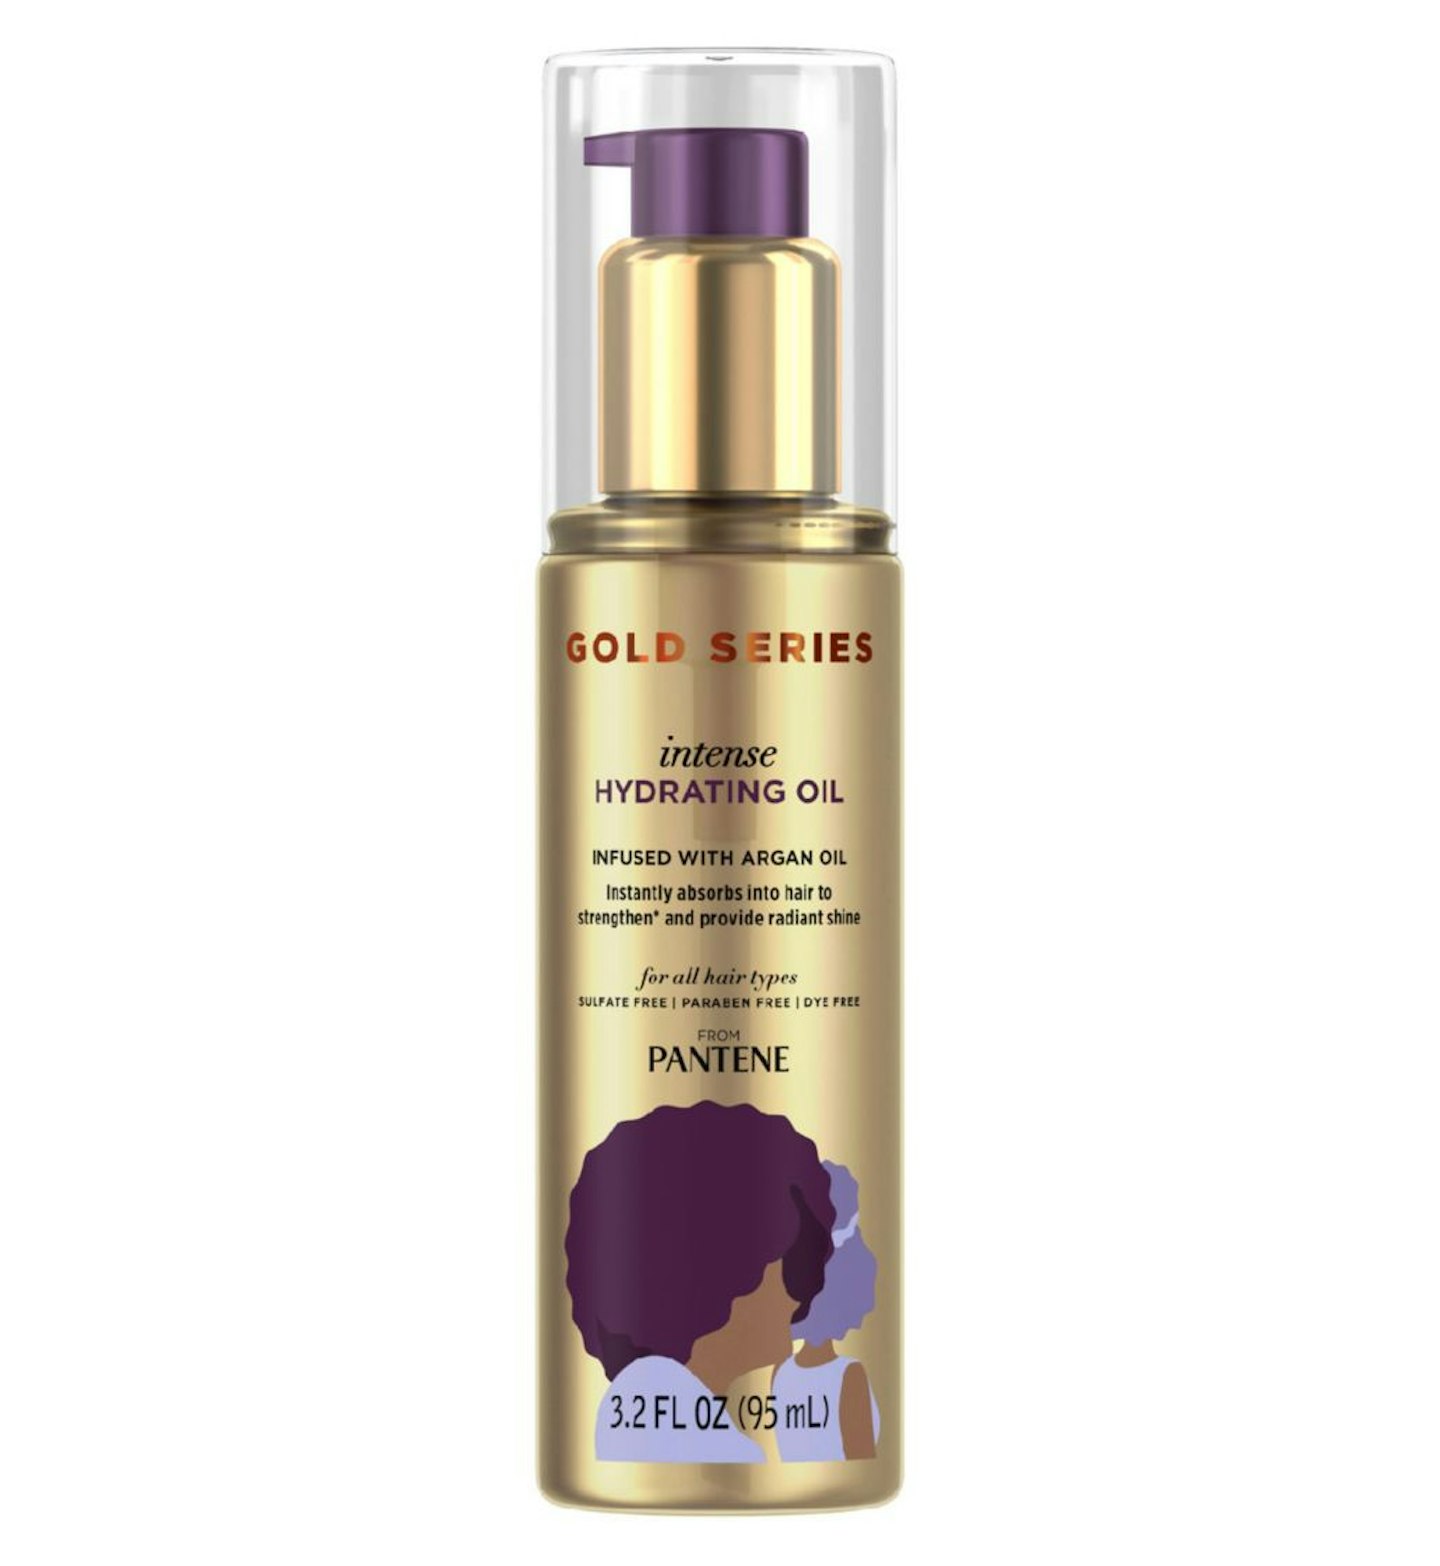 Best for textured hair: Pantene Gold Series Intense Hydrating Hair Oil, 95ml